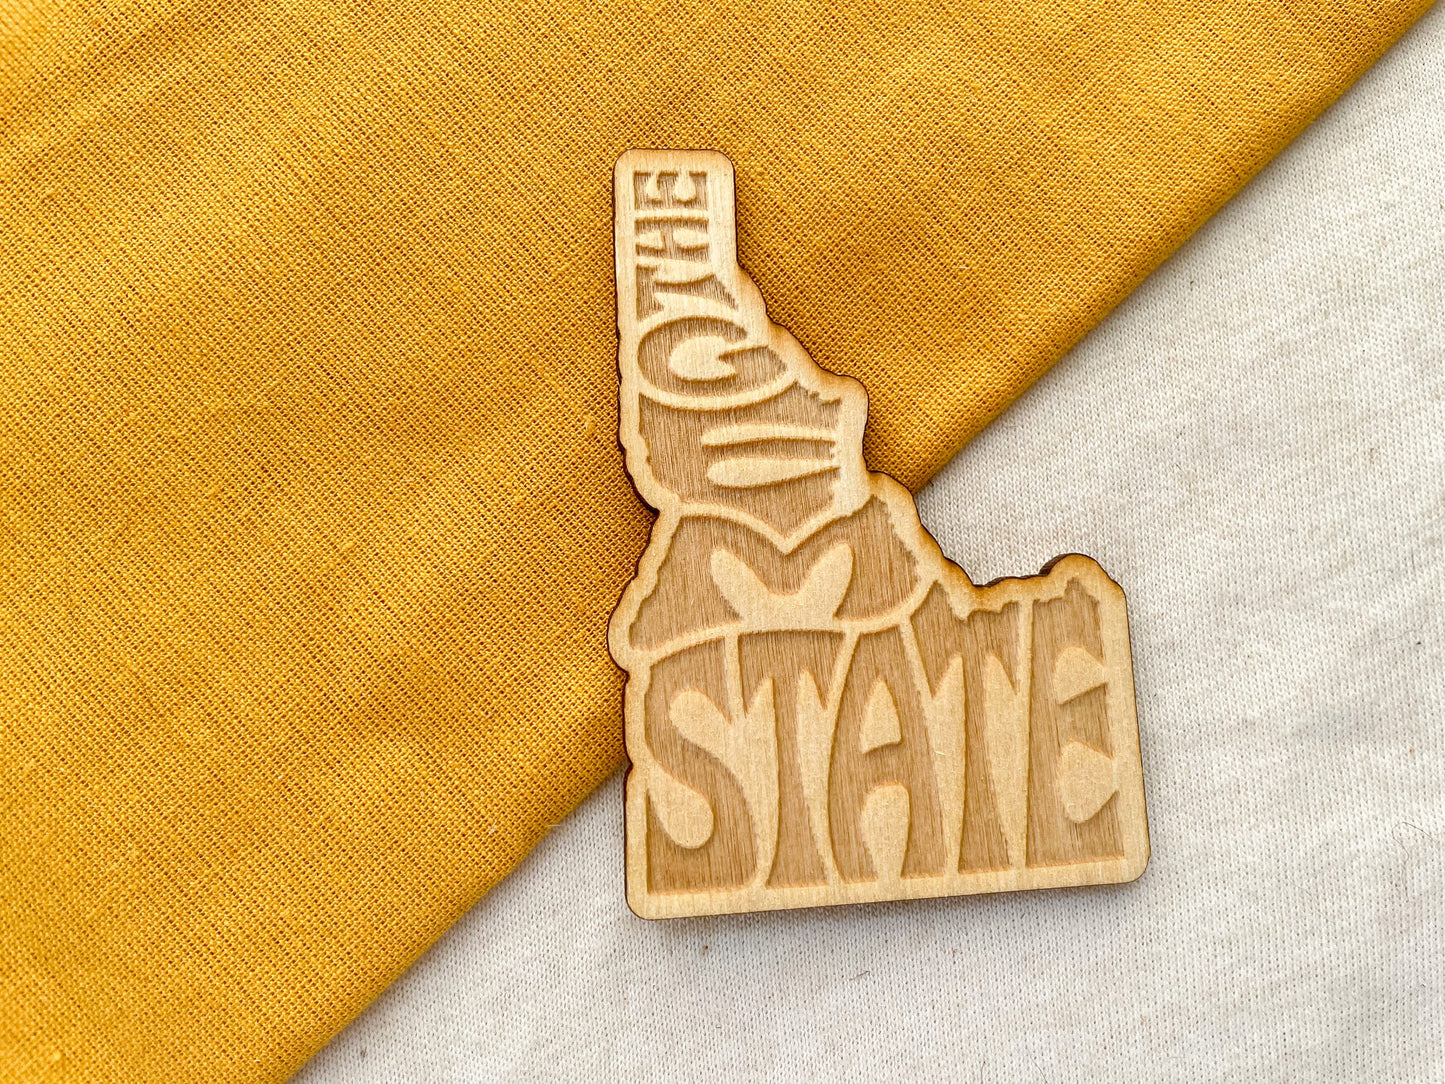 Idaho State Nickname Magnet